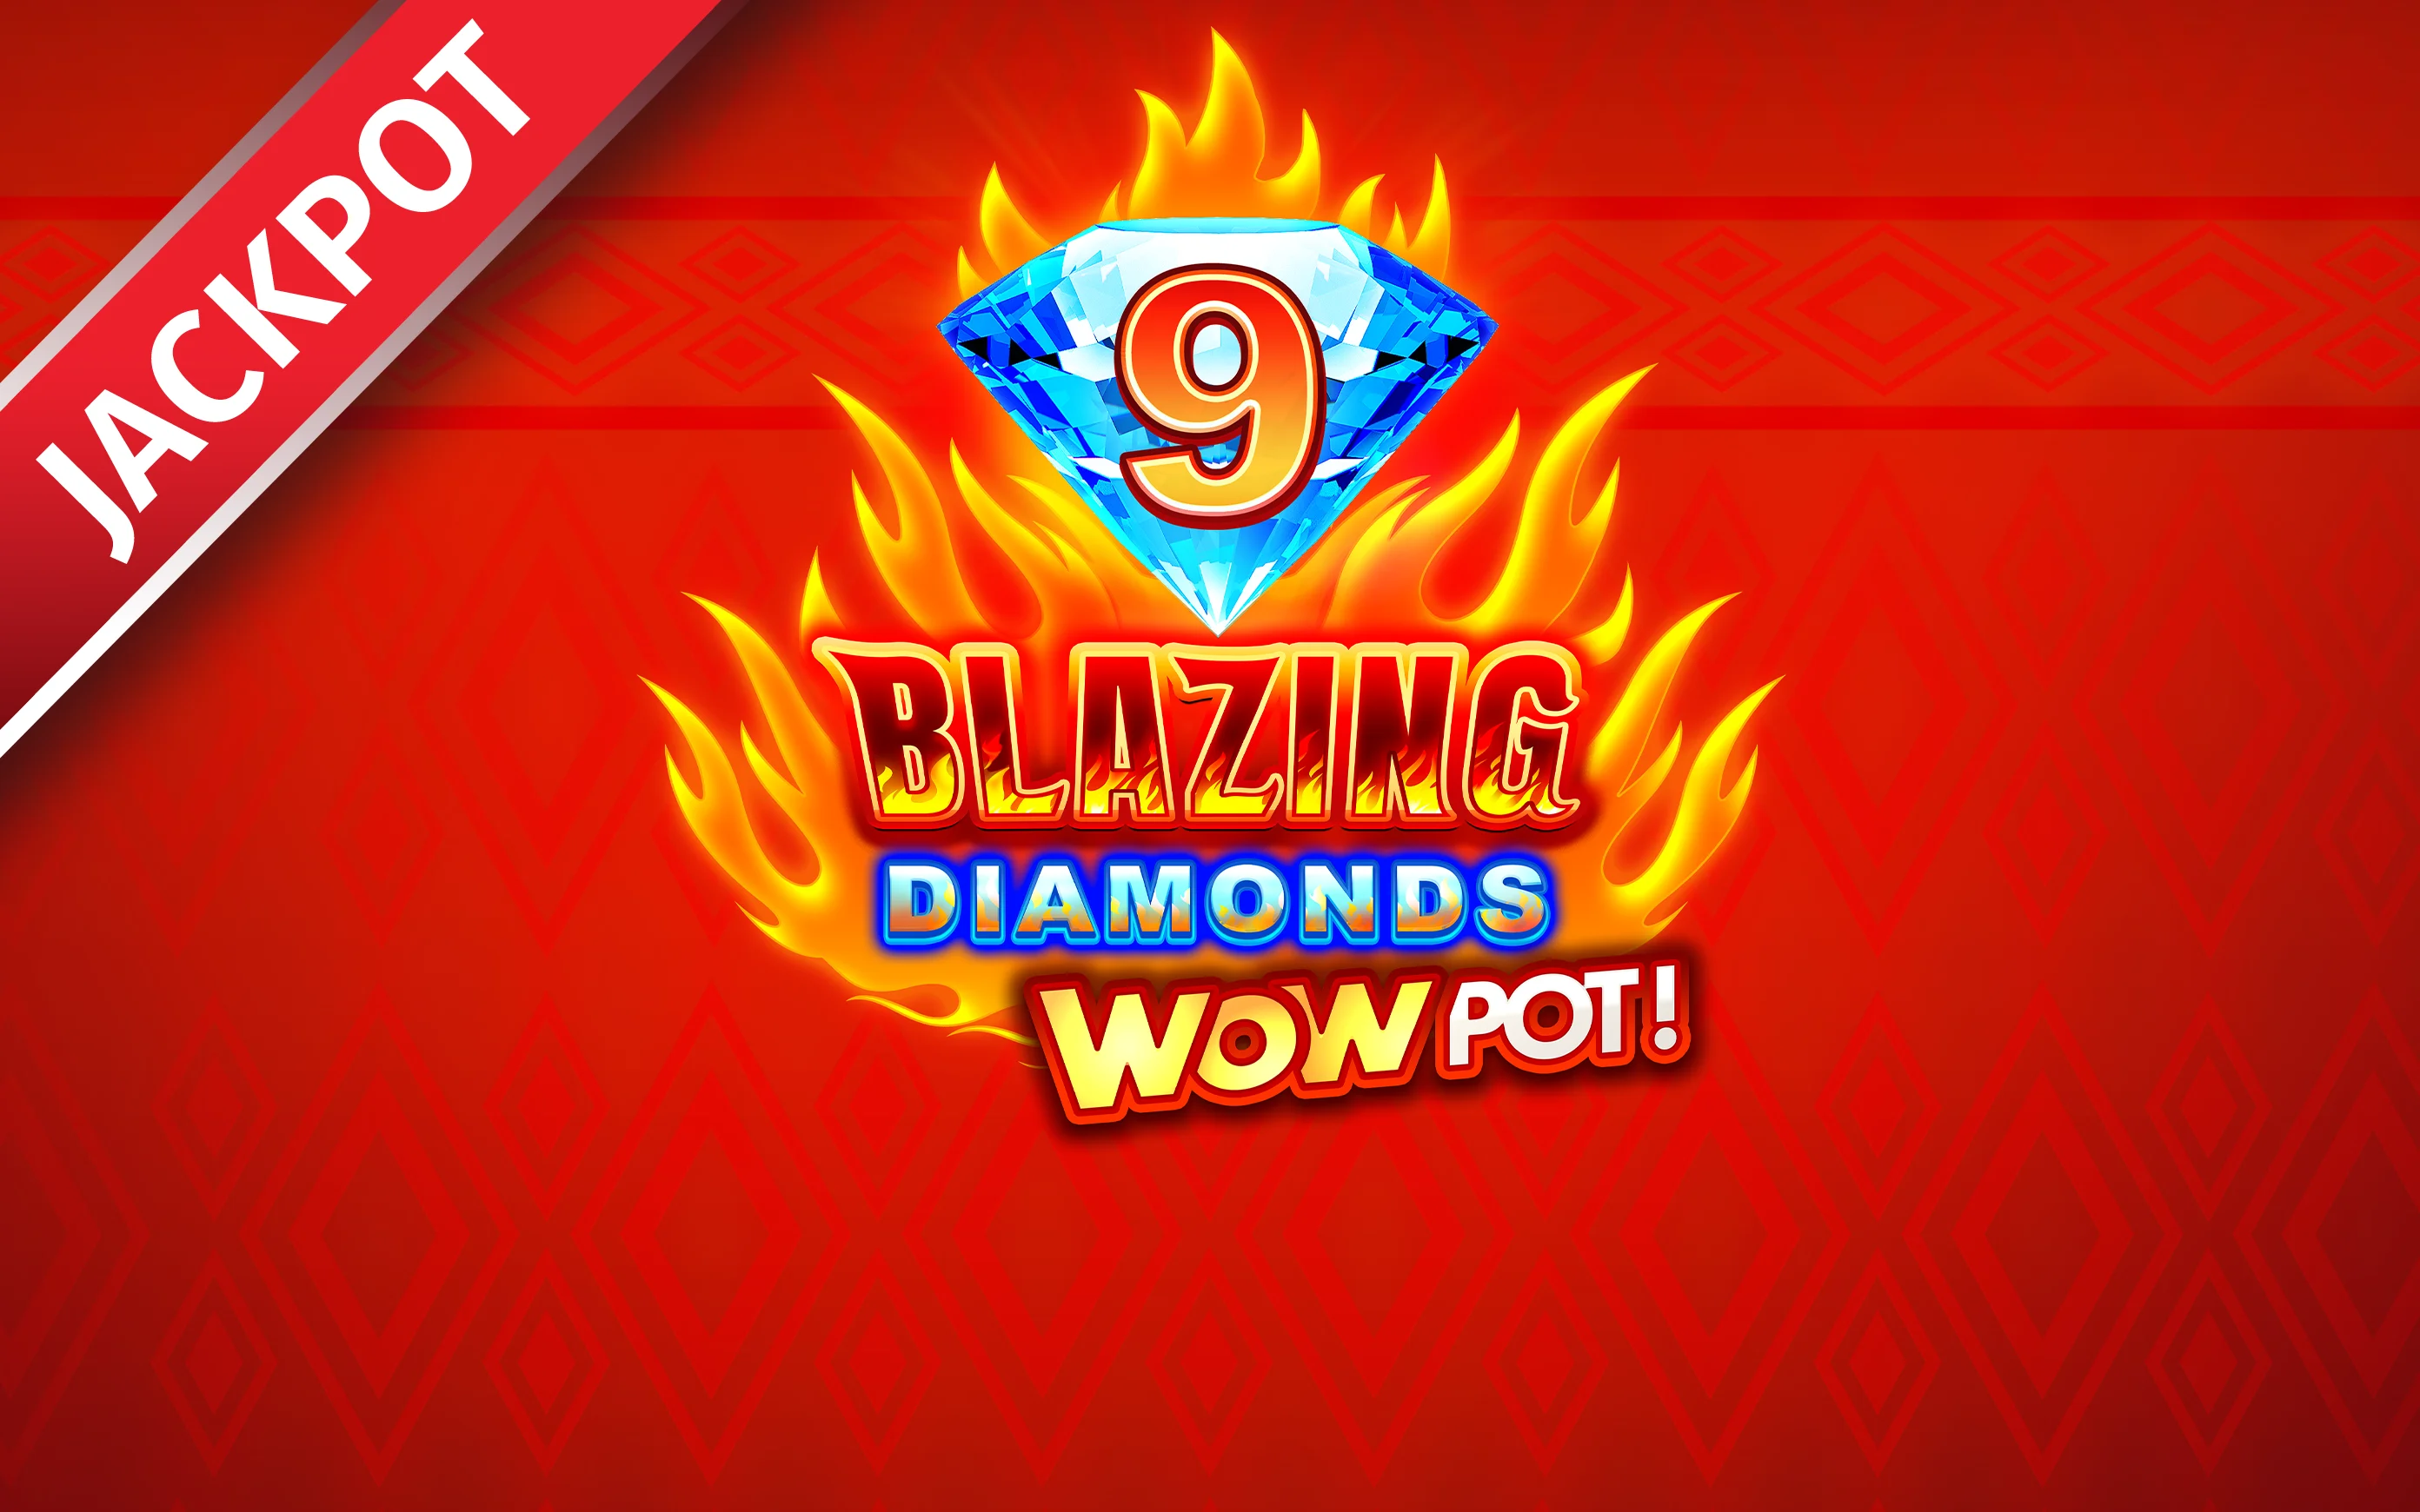 Jogue 9 Blazing Diamonds WOWPOT no casino online Starcasino.be 